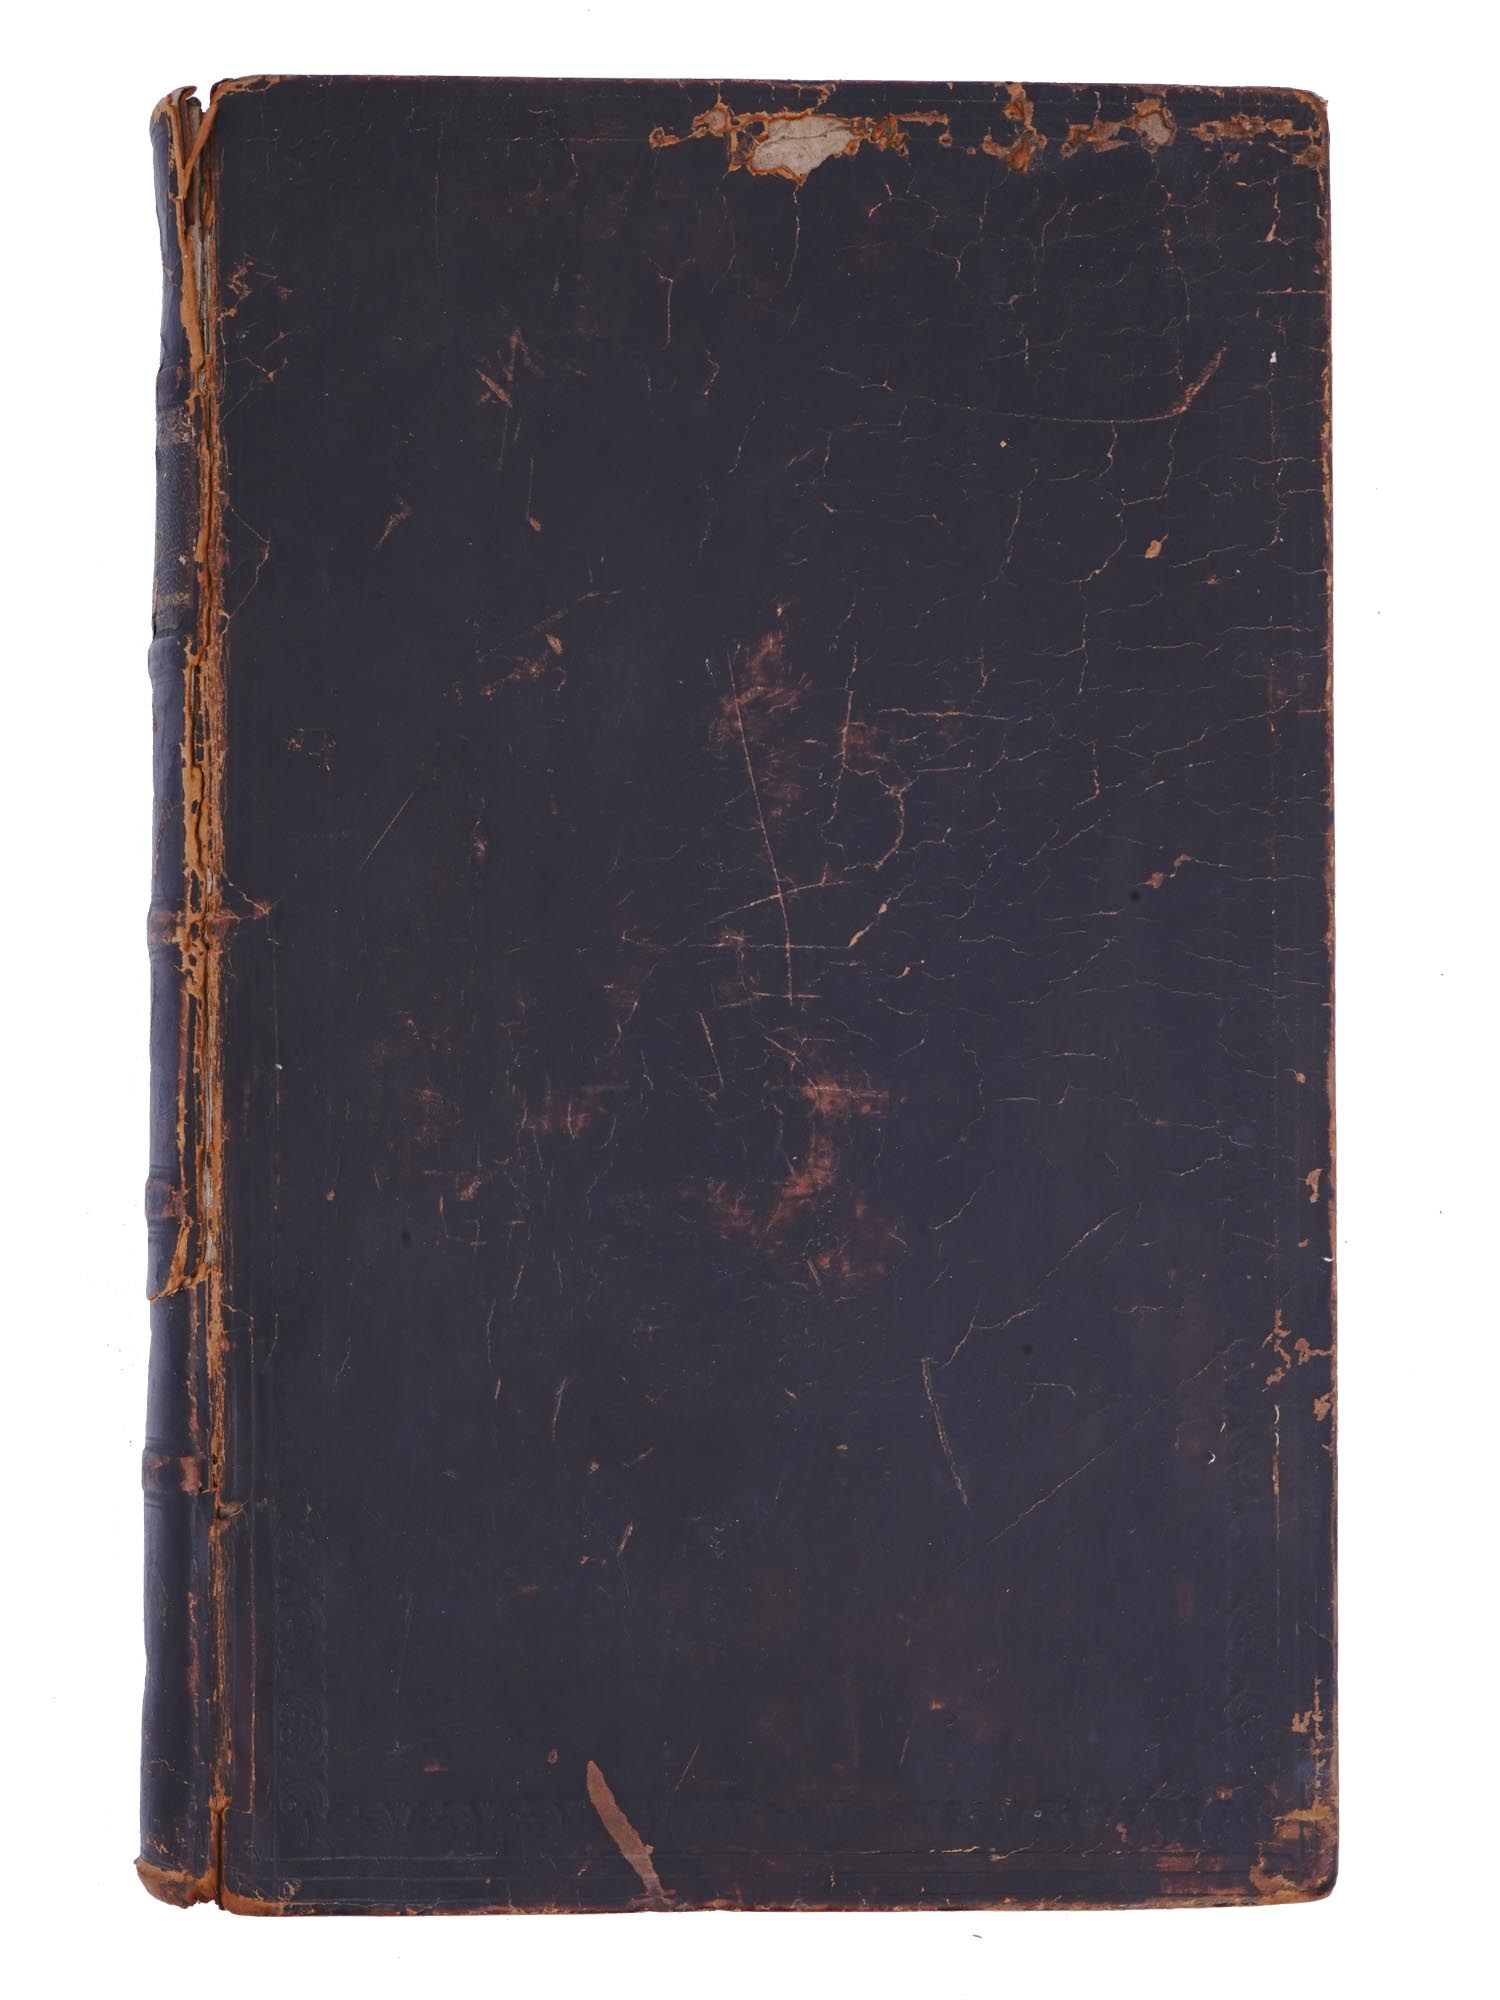 1687 DON QUIXOTE BY CERVANTES ILLUSTRATED EDITION BOOK PIC-2